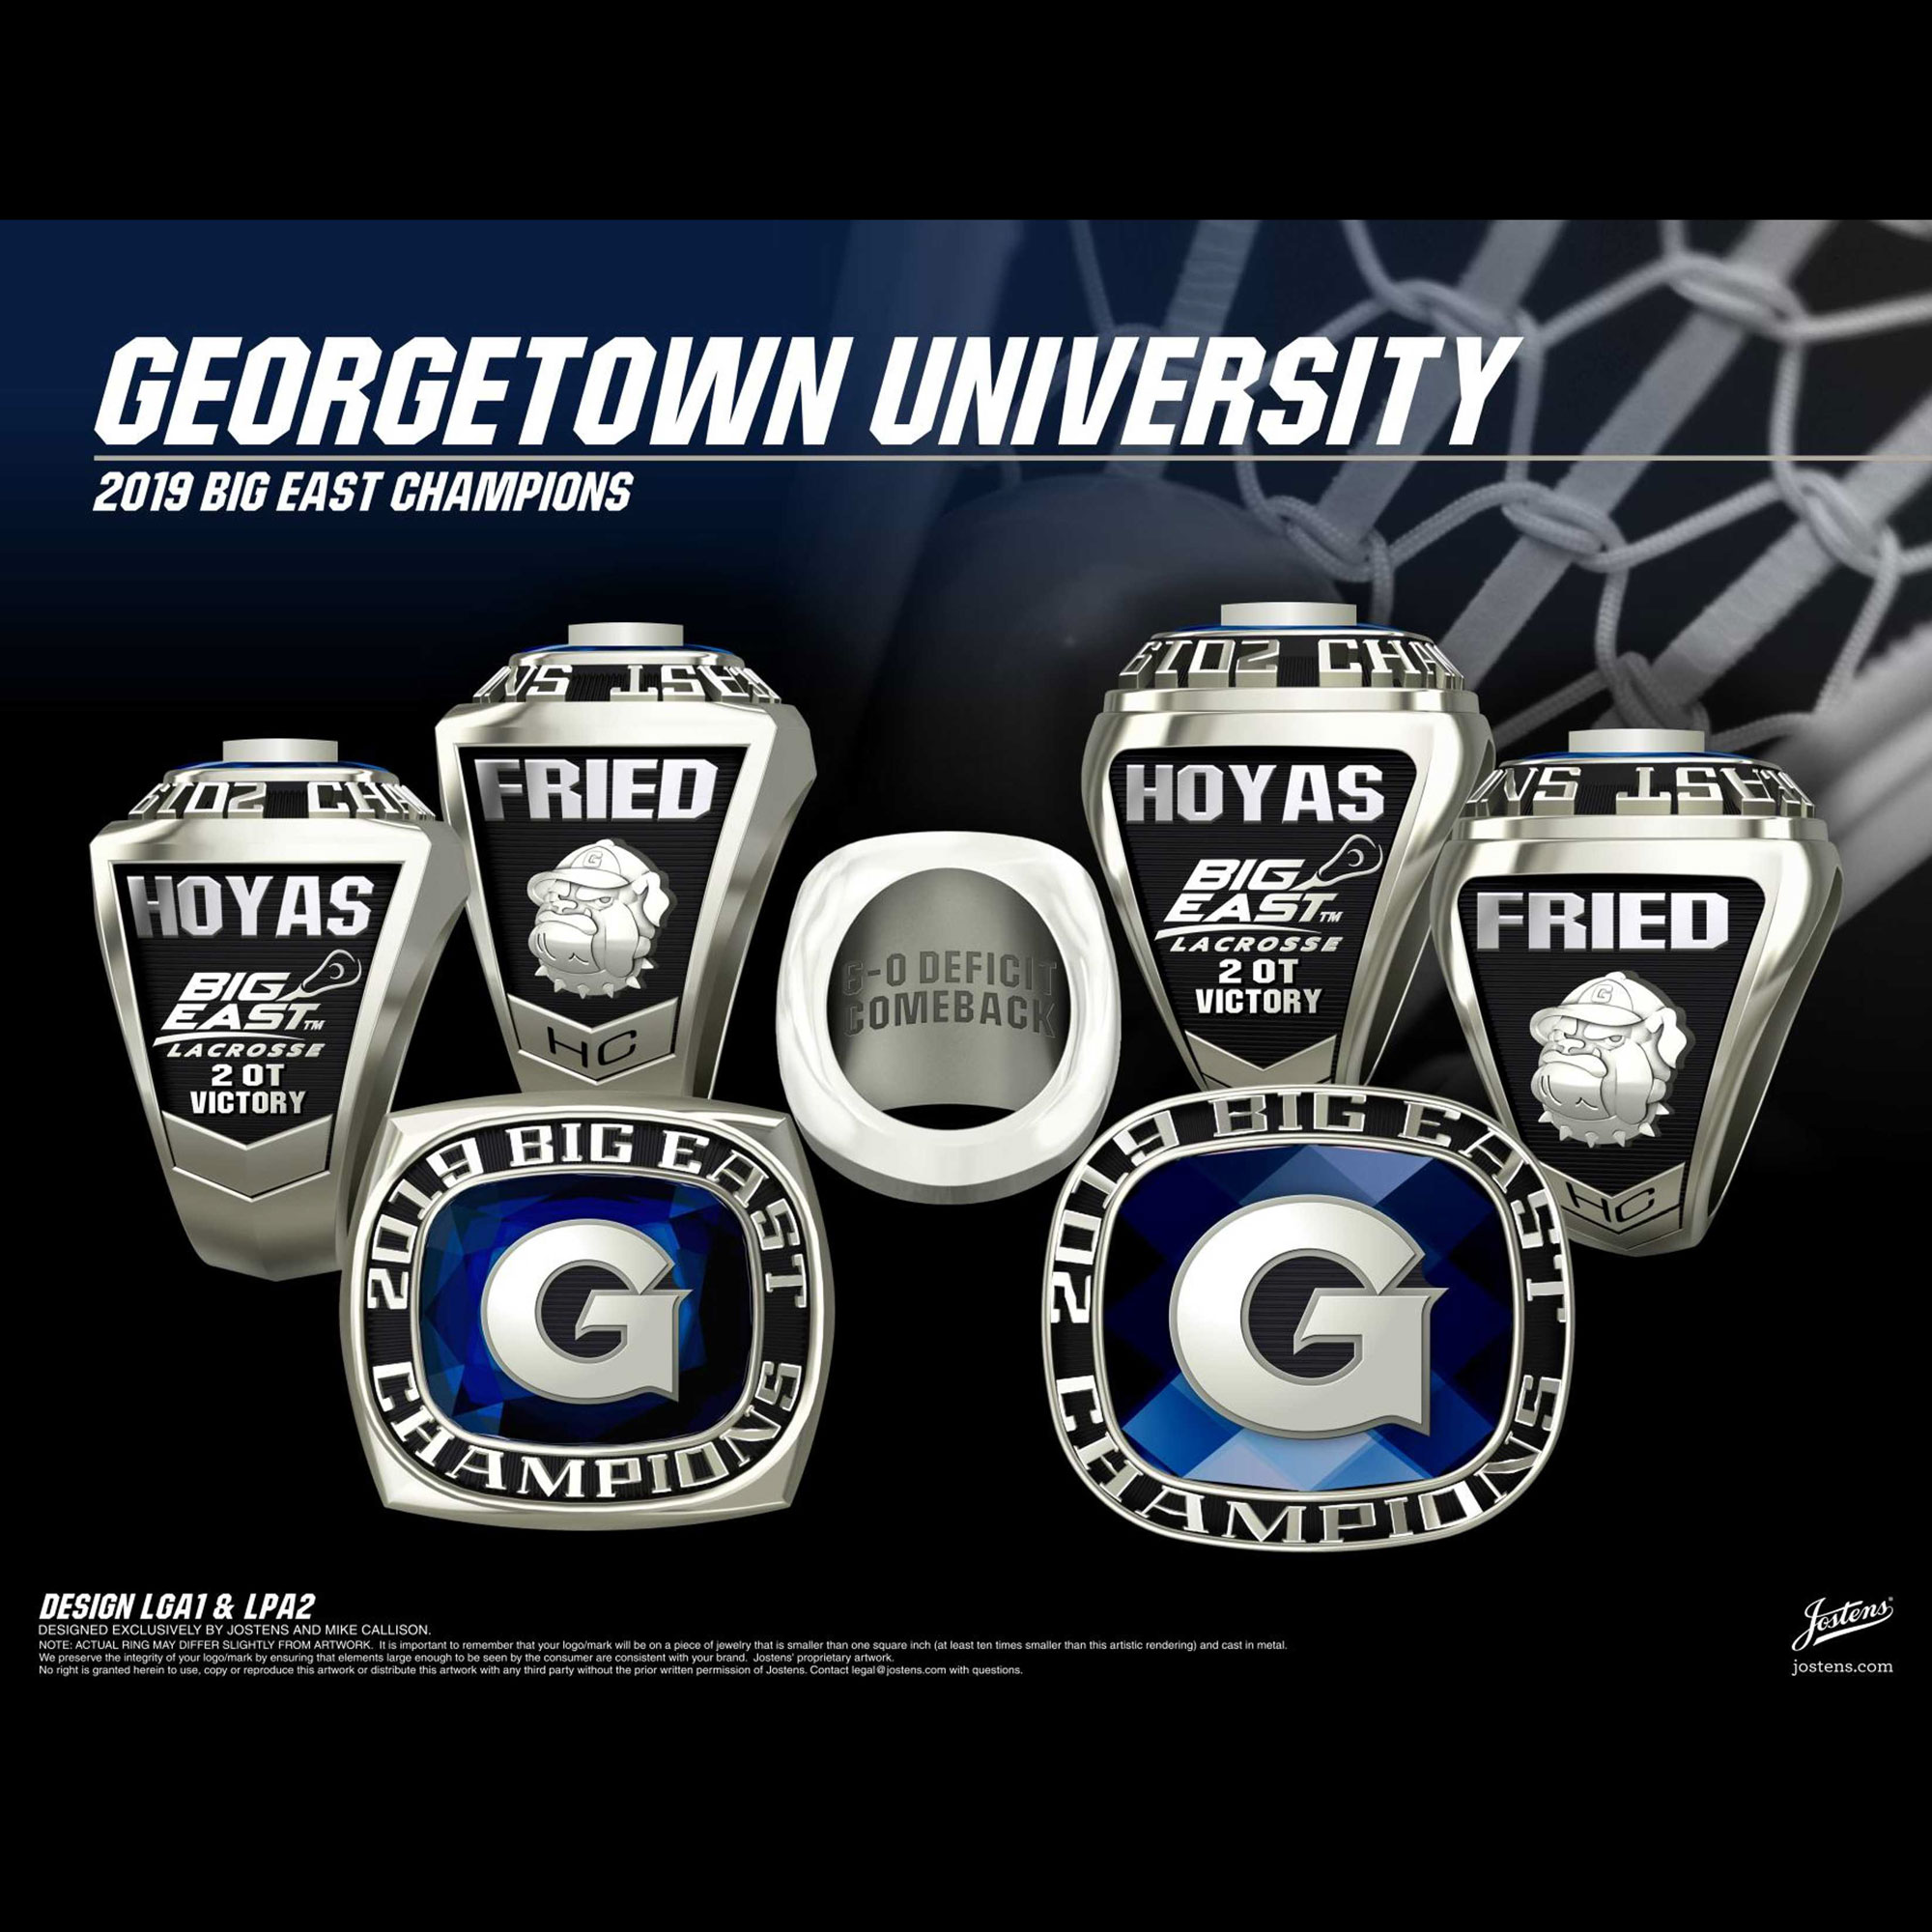 Georgetown University Women's Lacrosse 2019 Big East Championship Ring